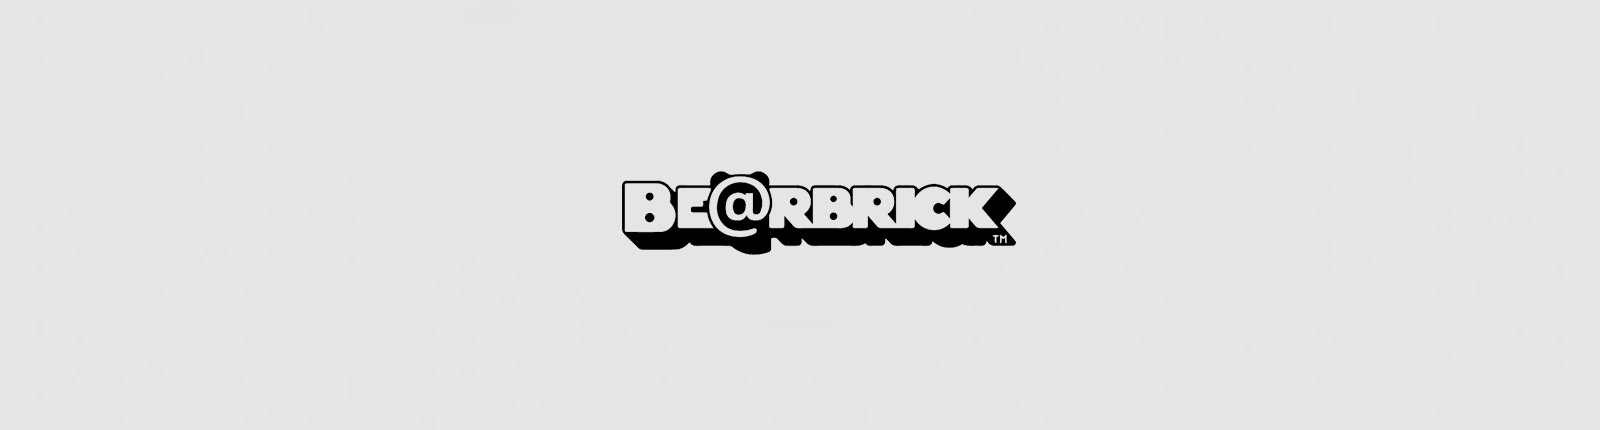 Bearbrick Logo